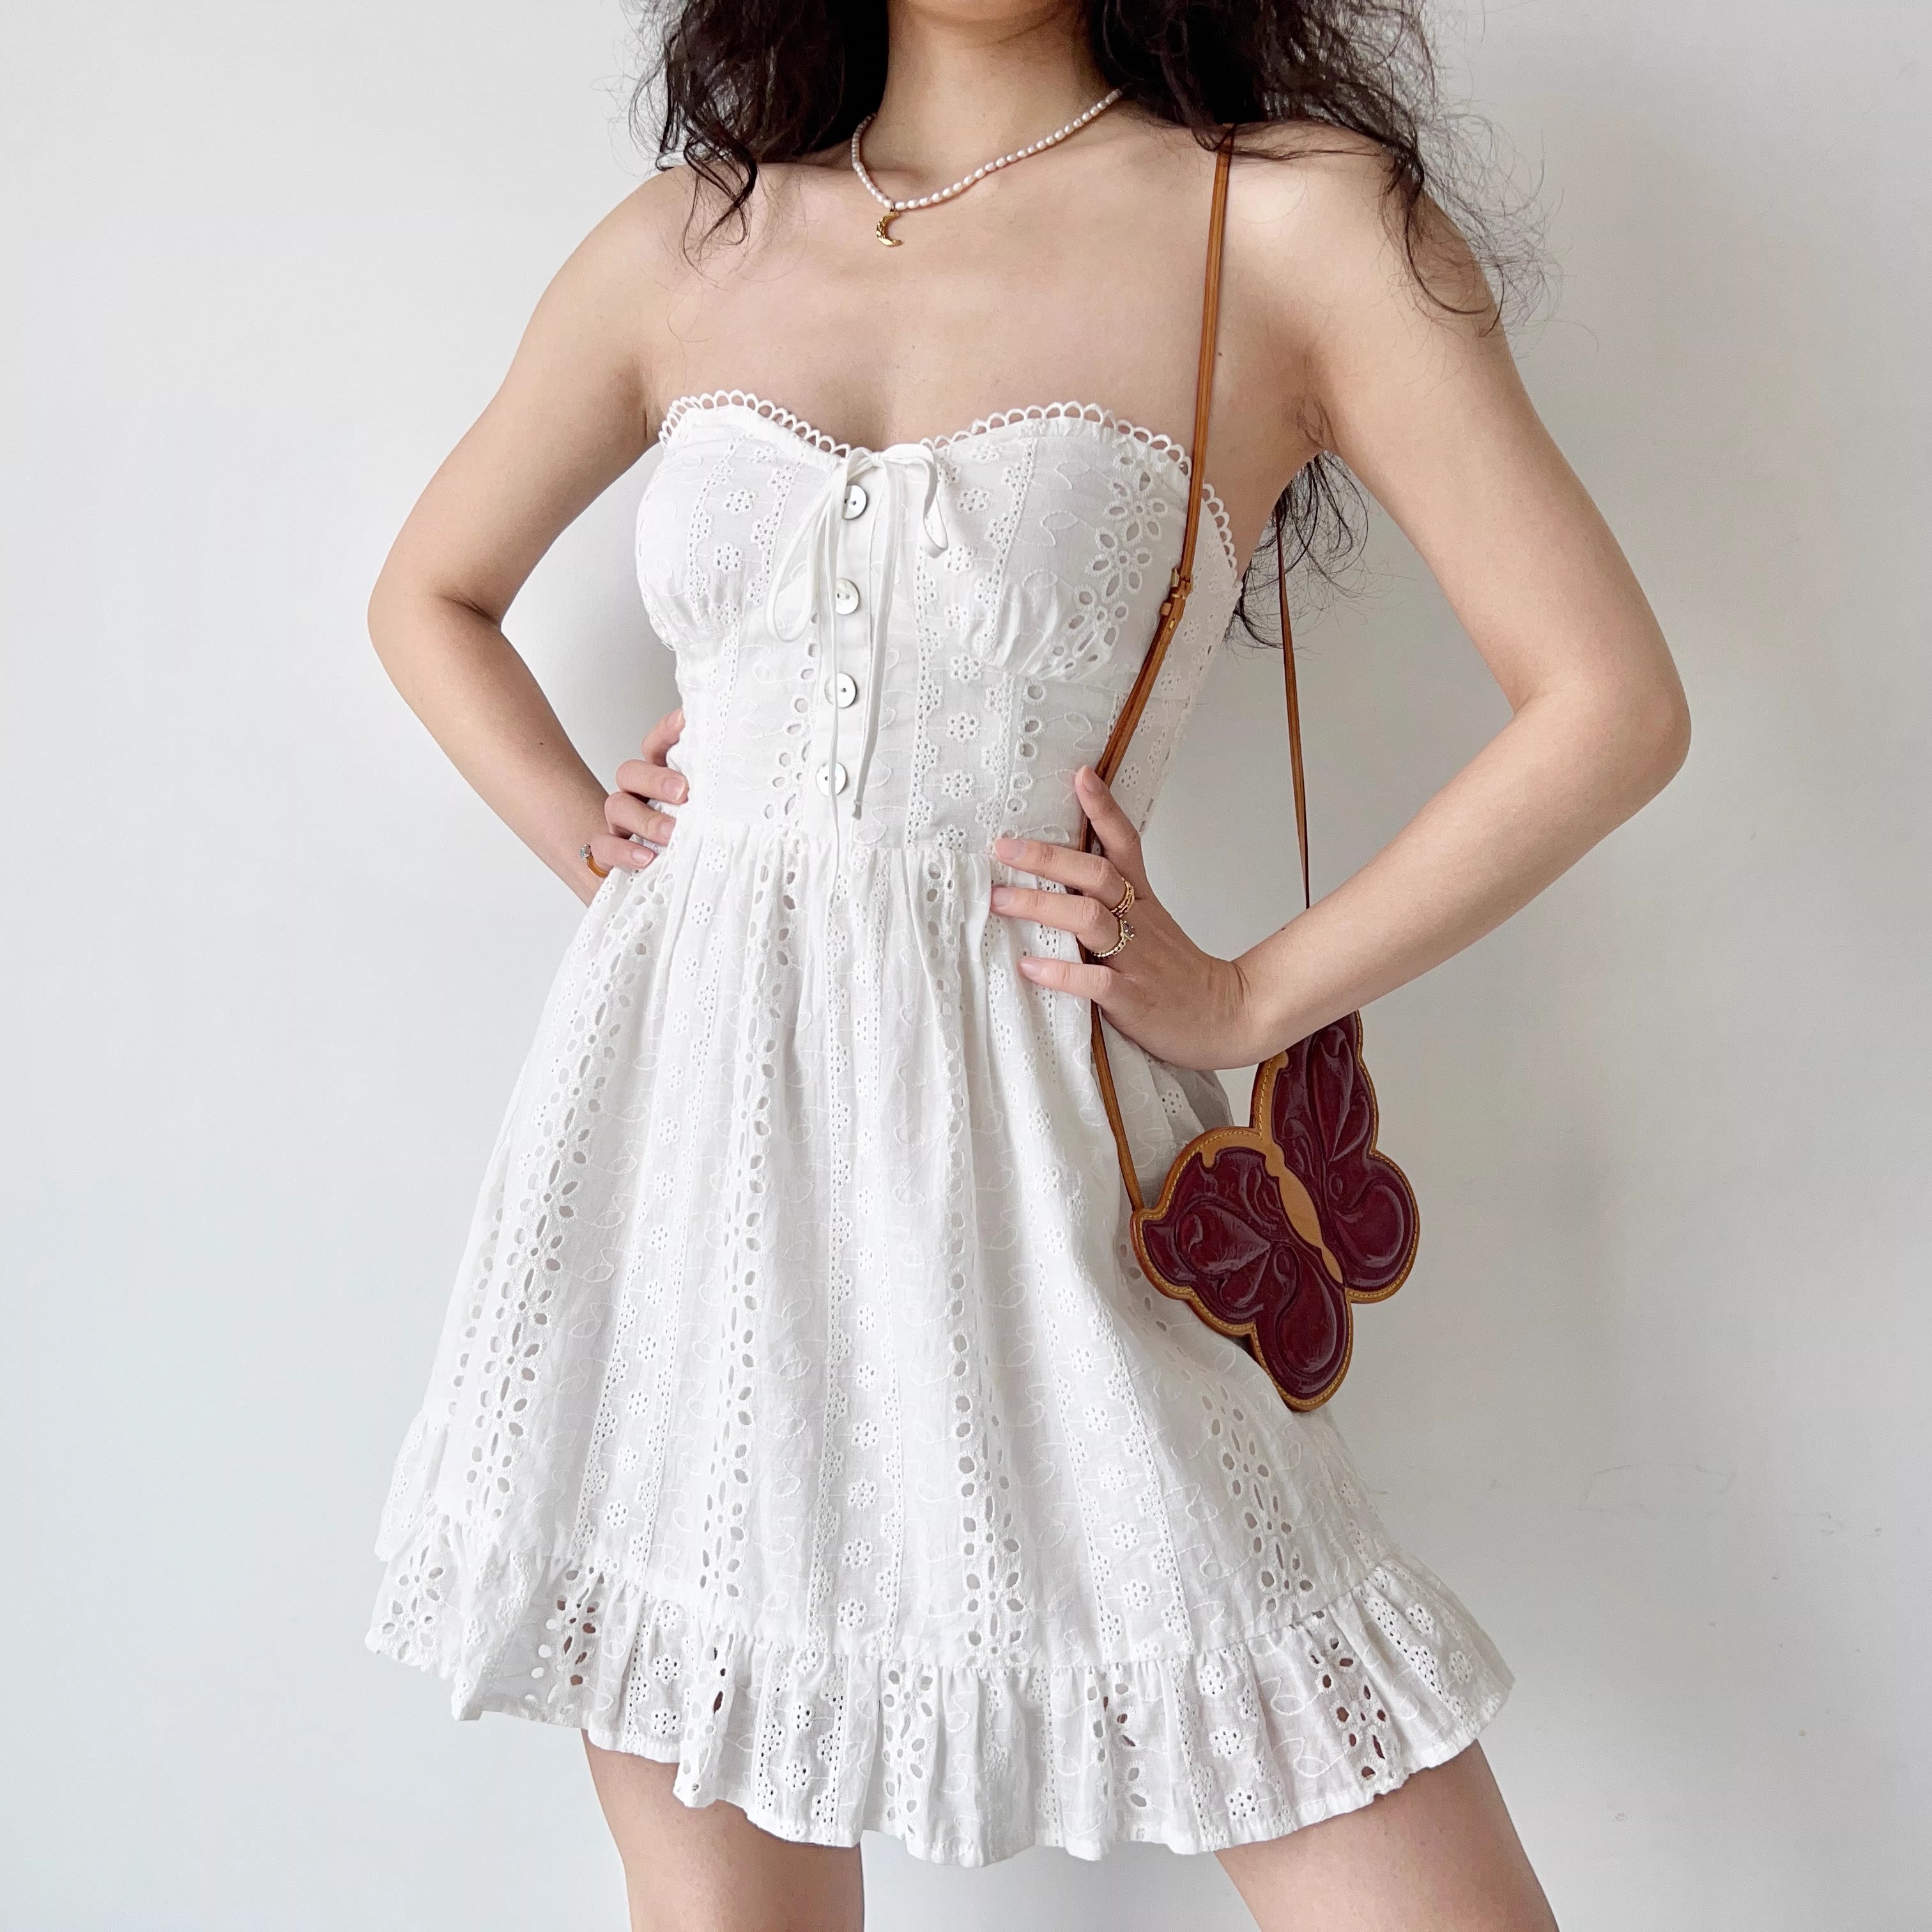 Lace Embroider လက်ကား Elegant Dresses စျေးနှုန်းစာရင်း (၄)